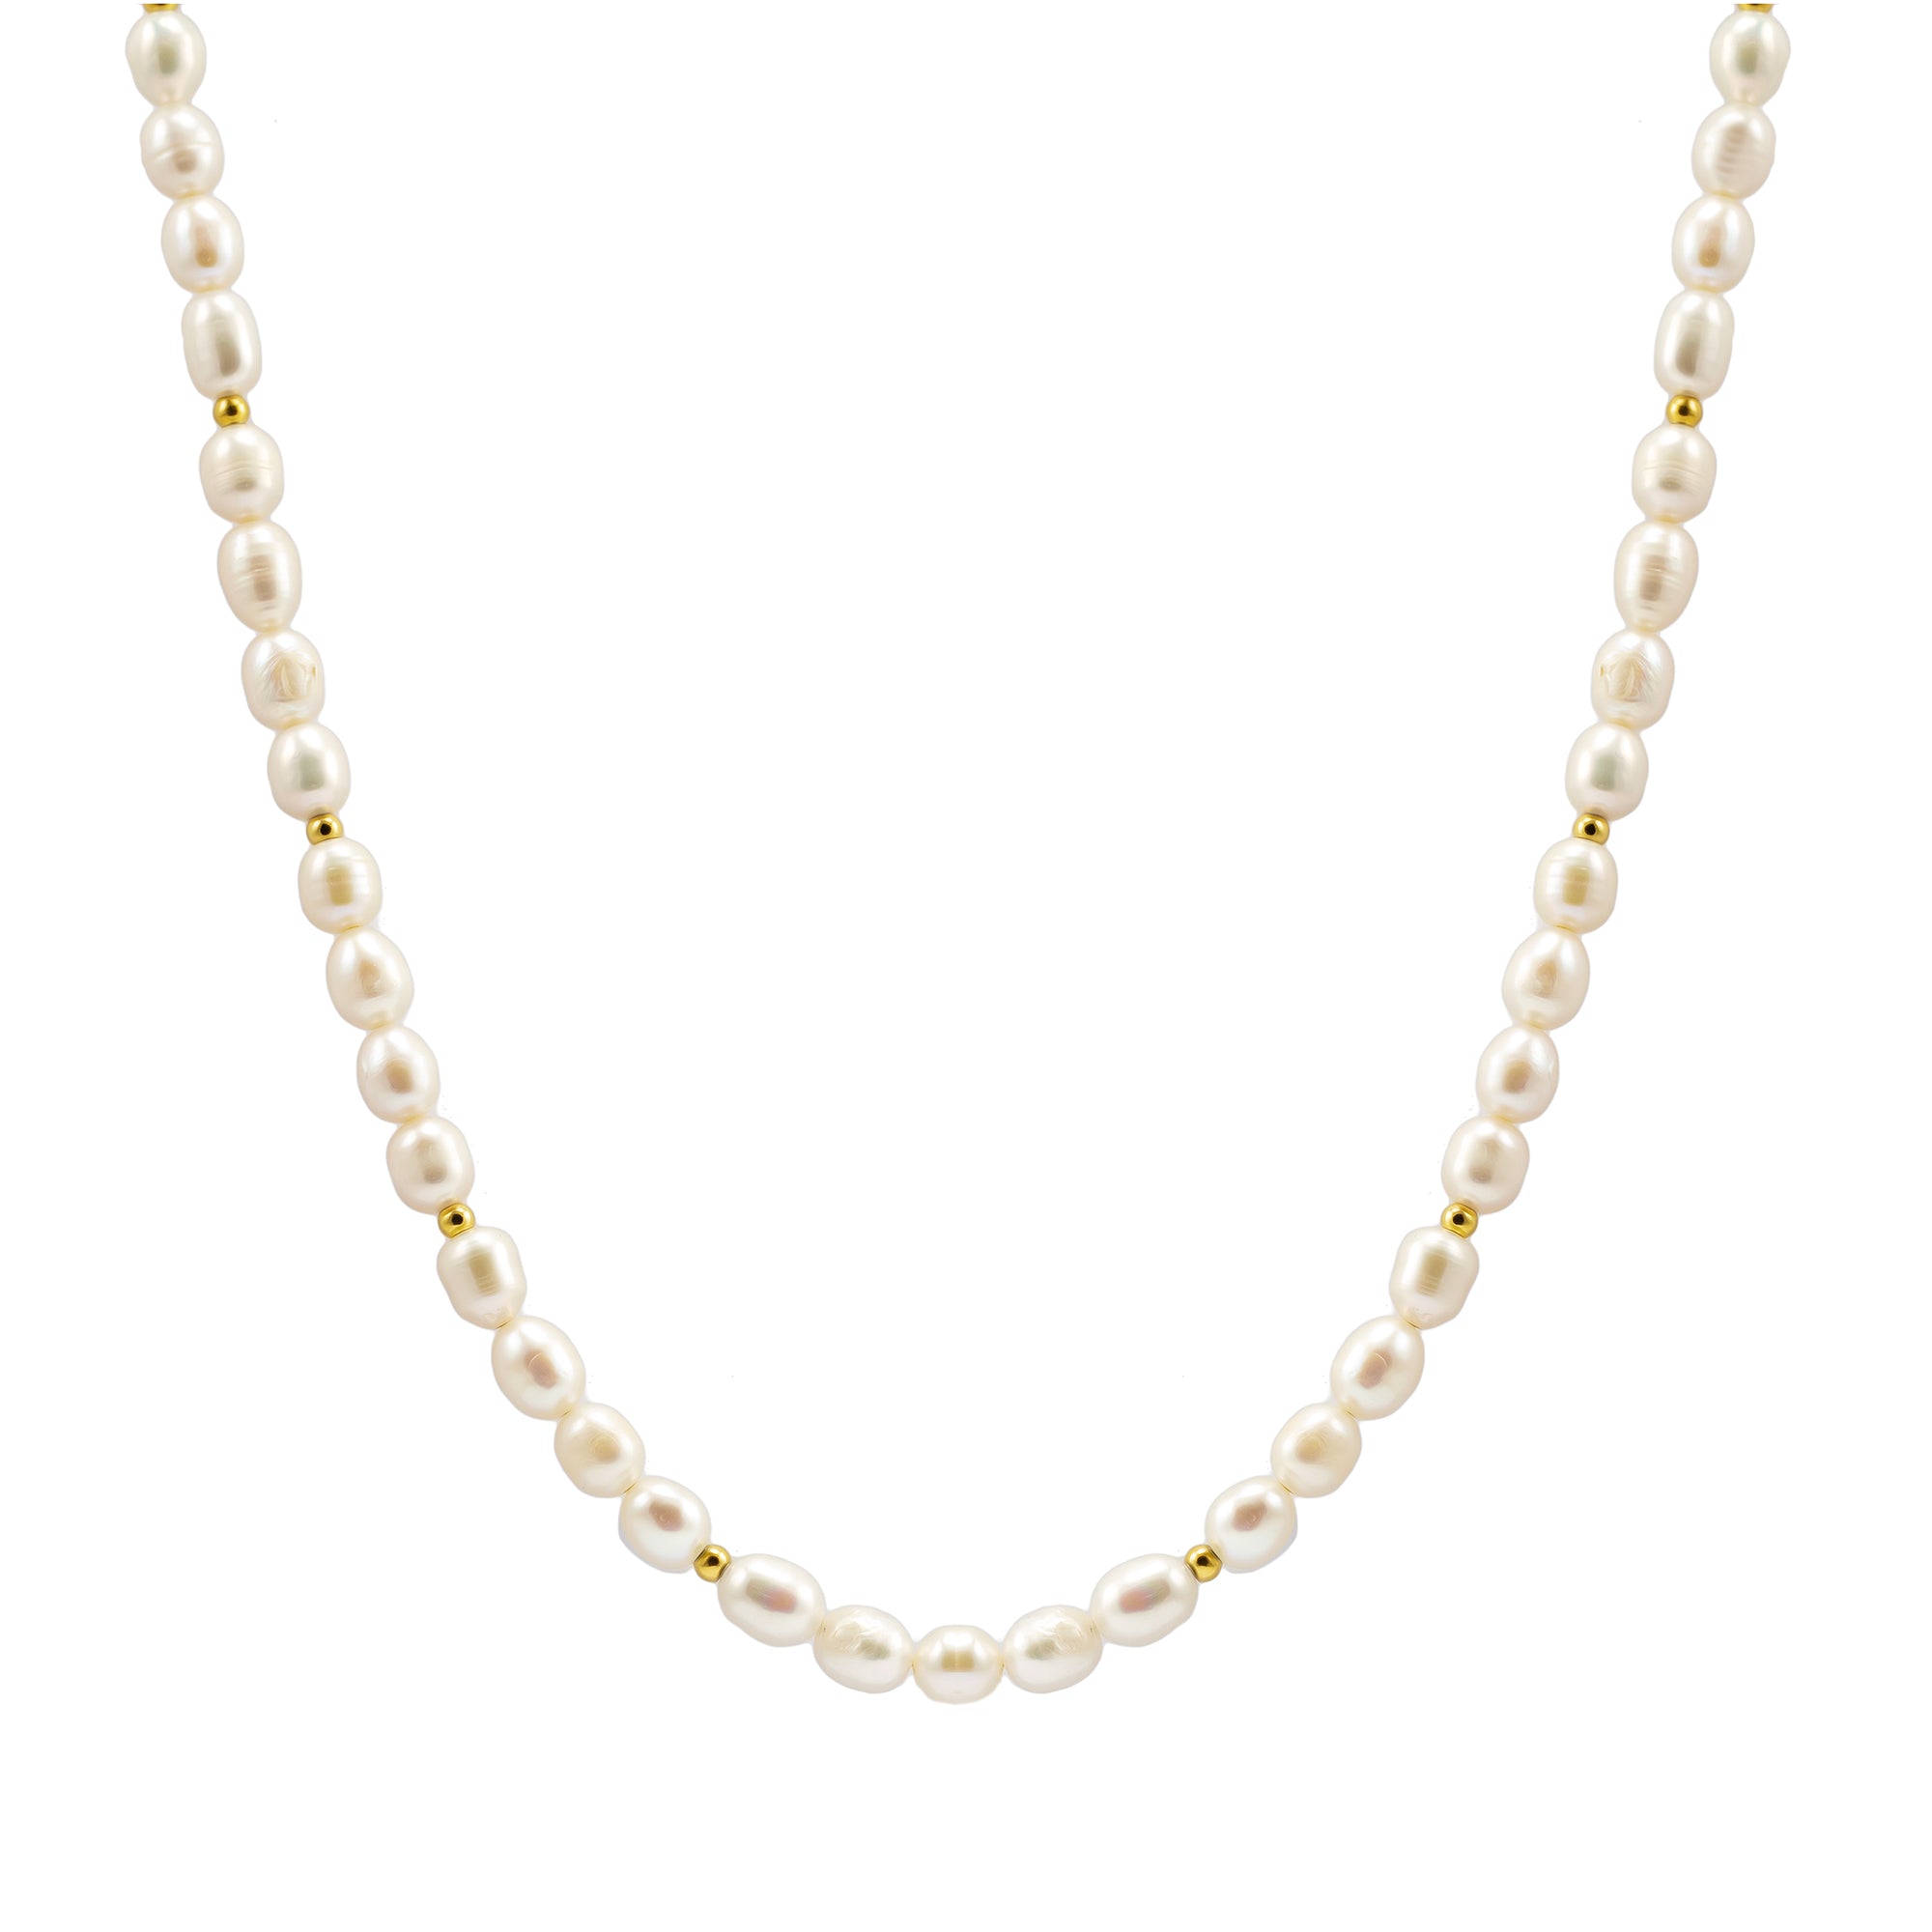 The Amalfi Pearl NecklaceBy Rae Jewellery